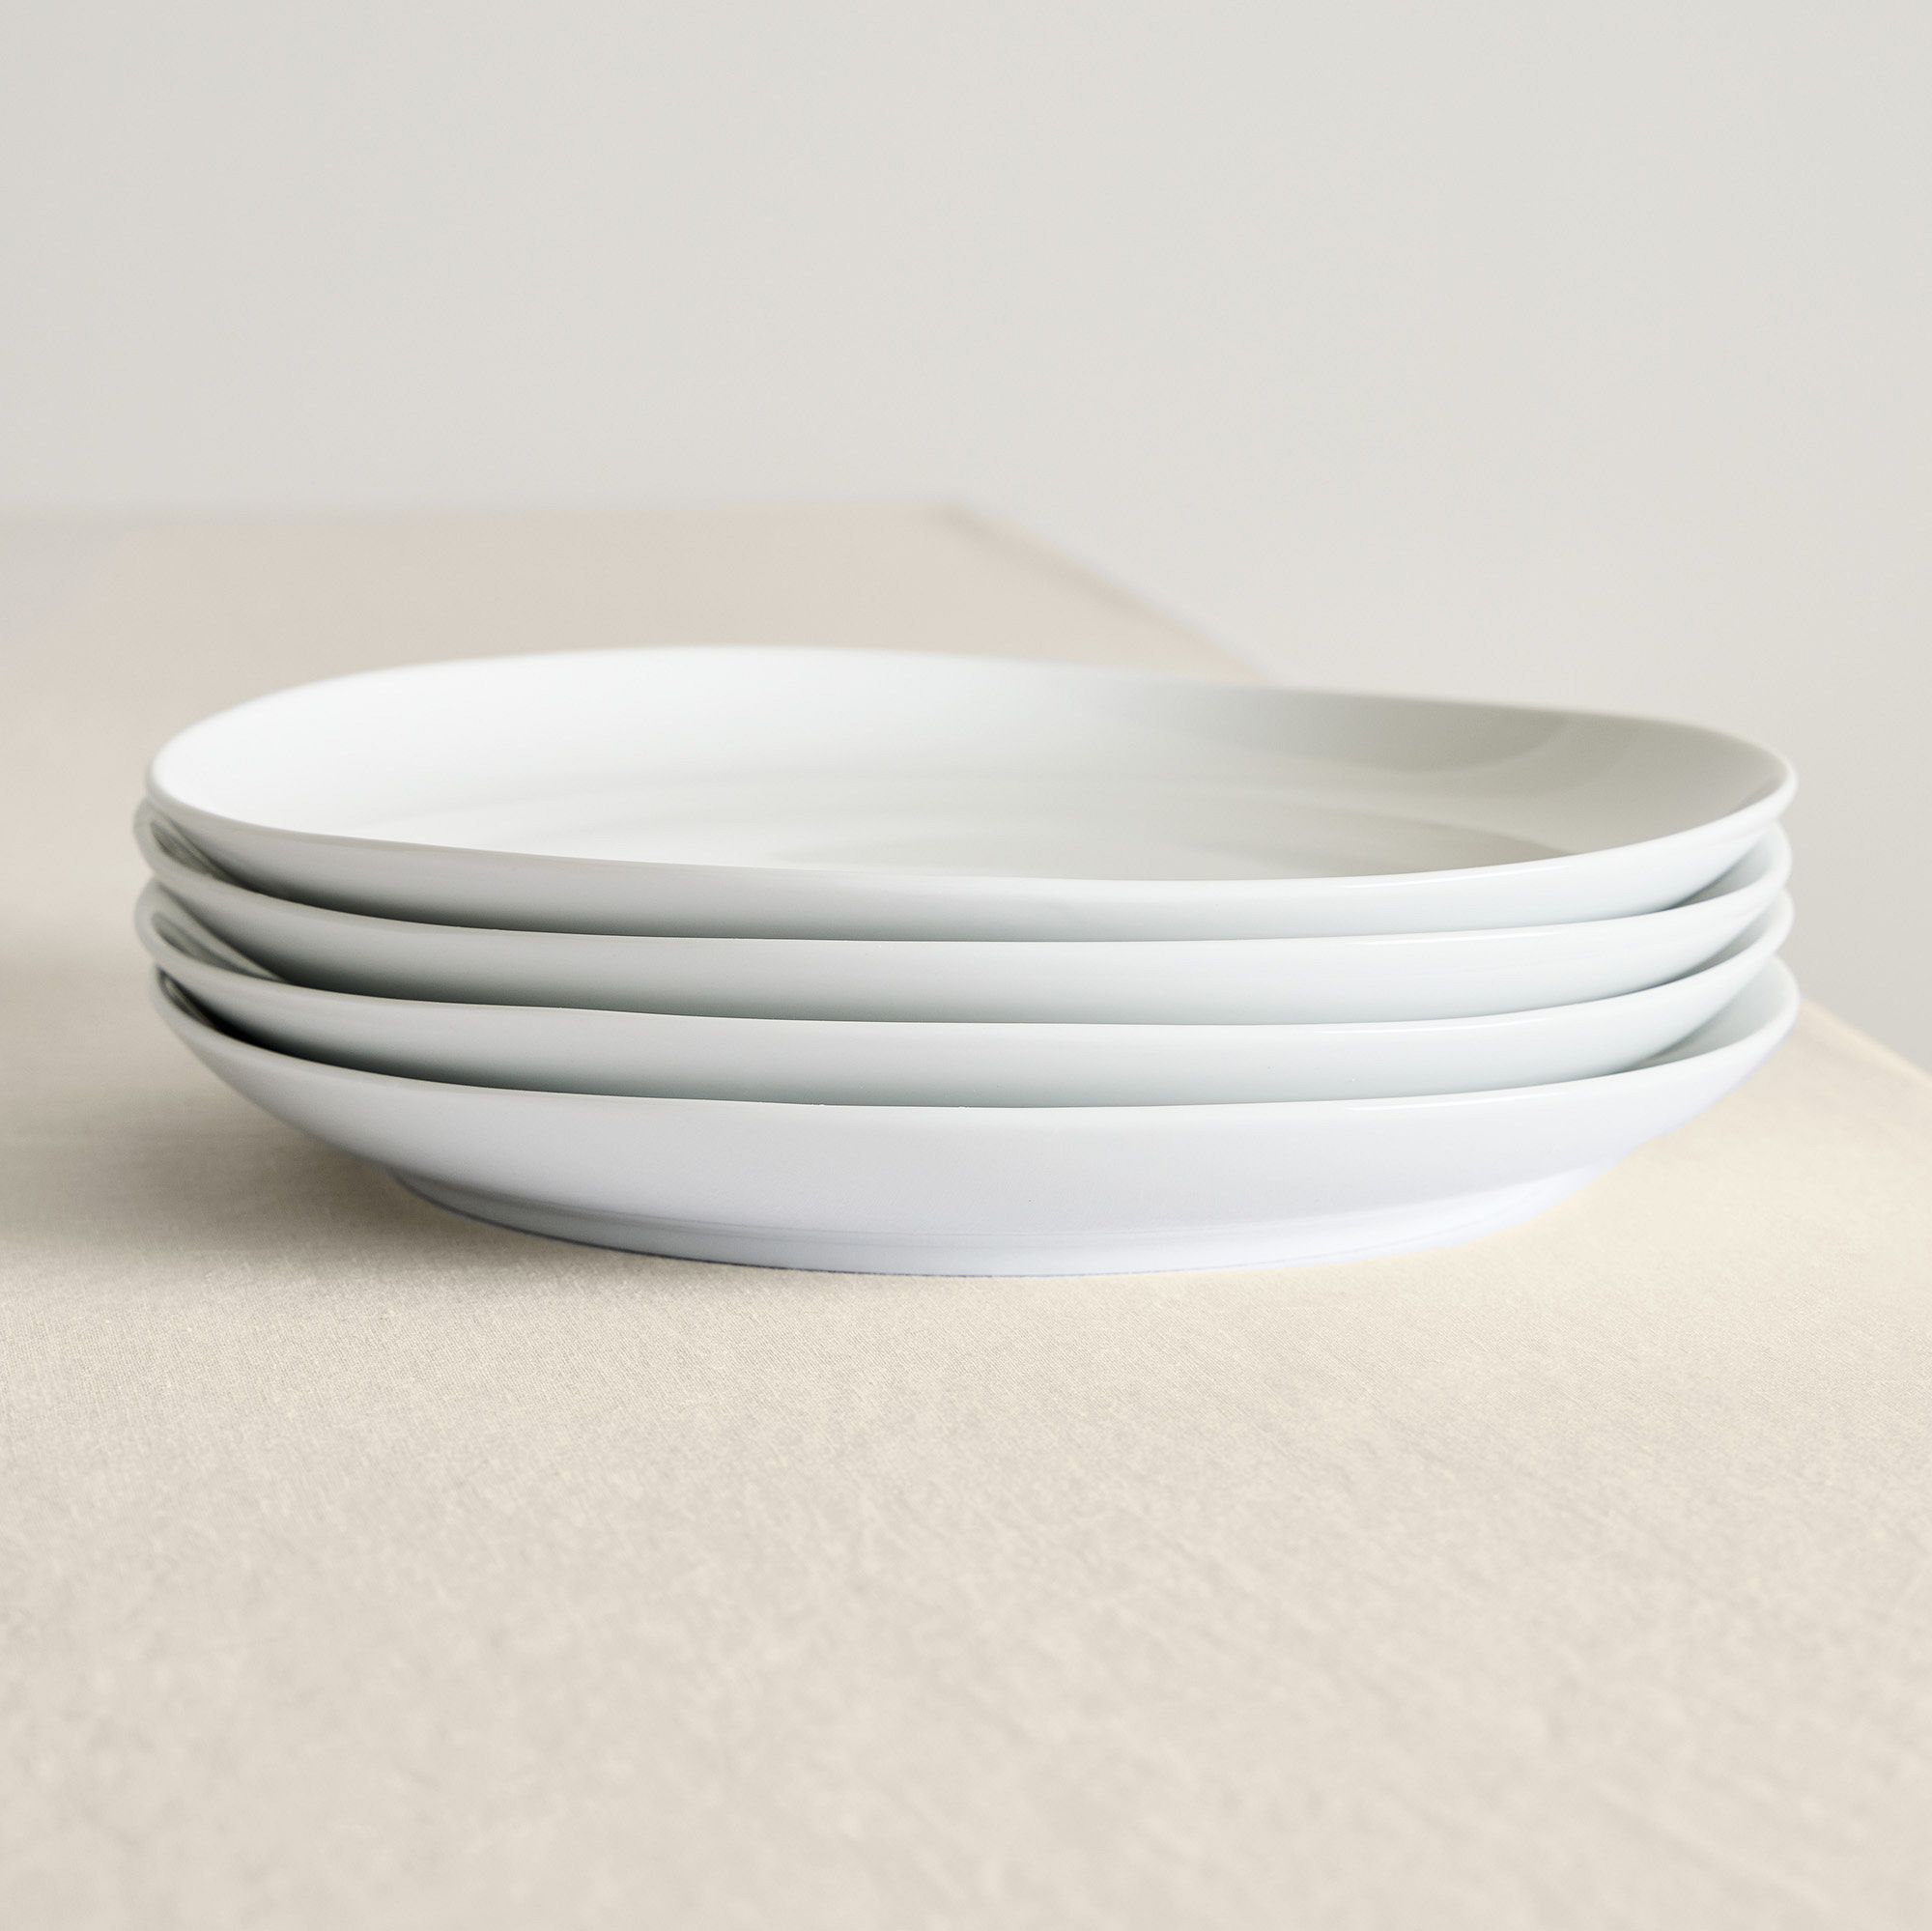 Organic Porcelain Dinnerware Collection | West Elm